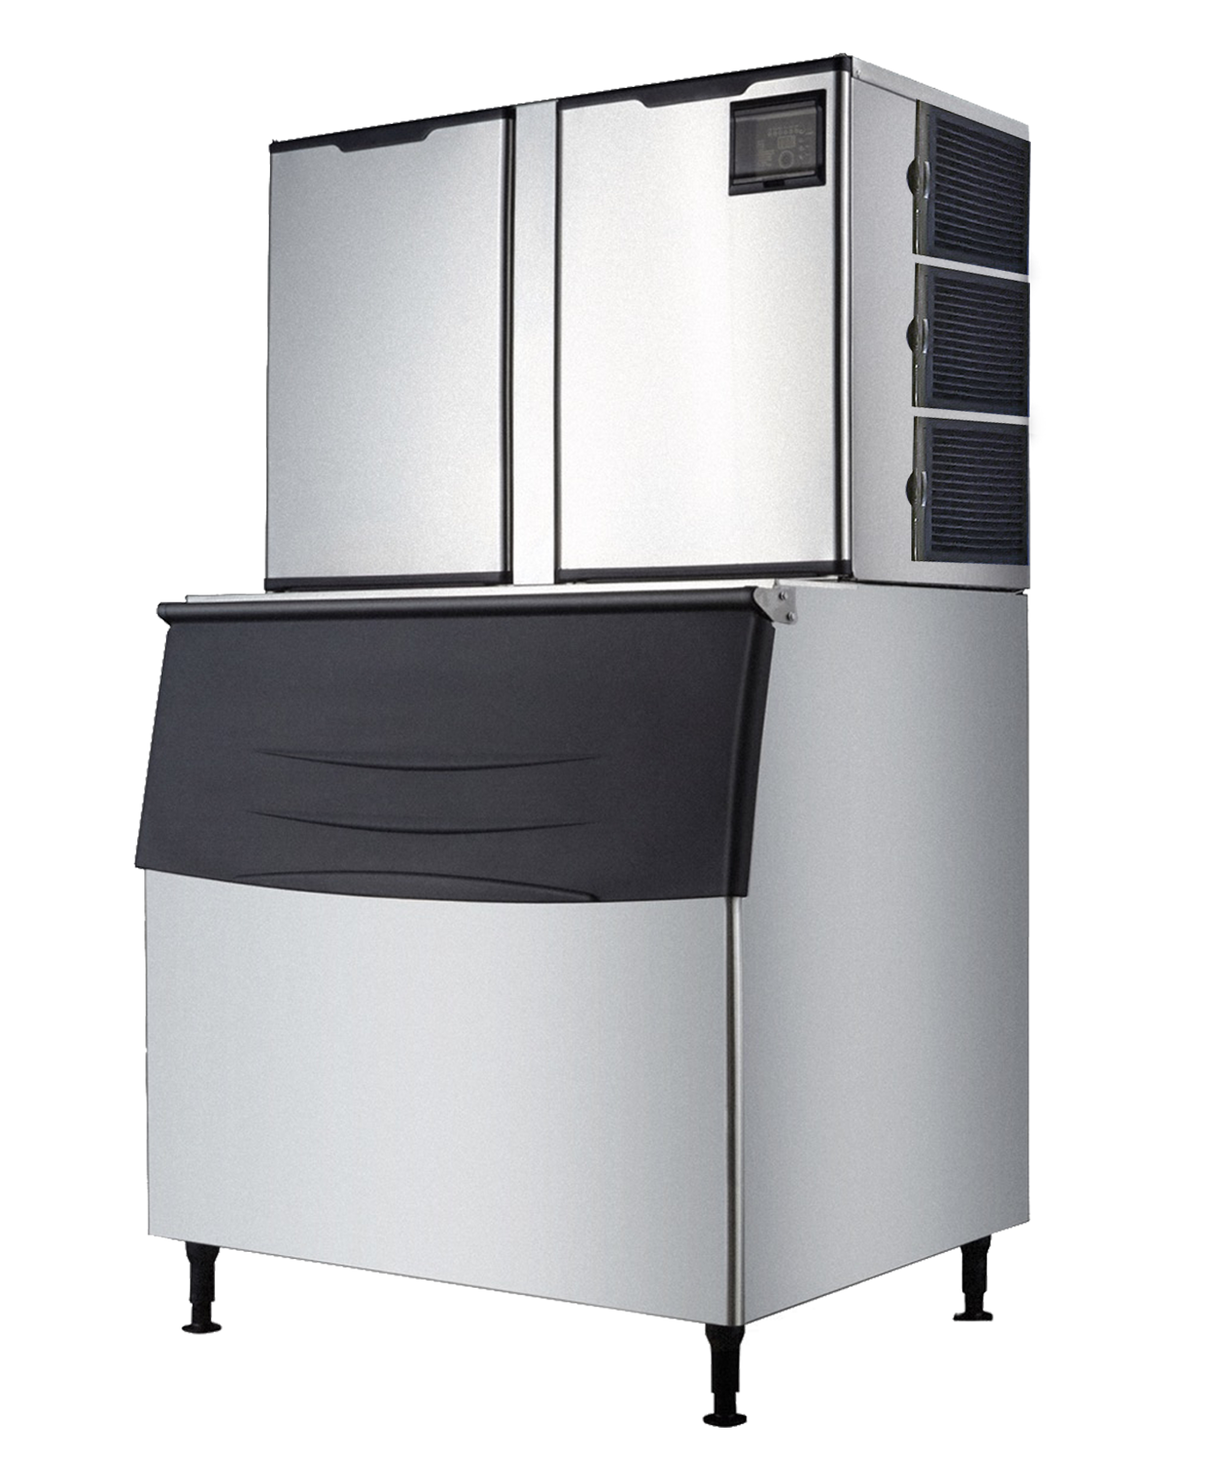 ICEPRO 680kg/24hr Cube Ice Maker Machine